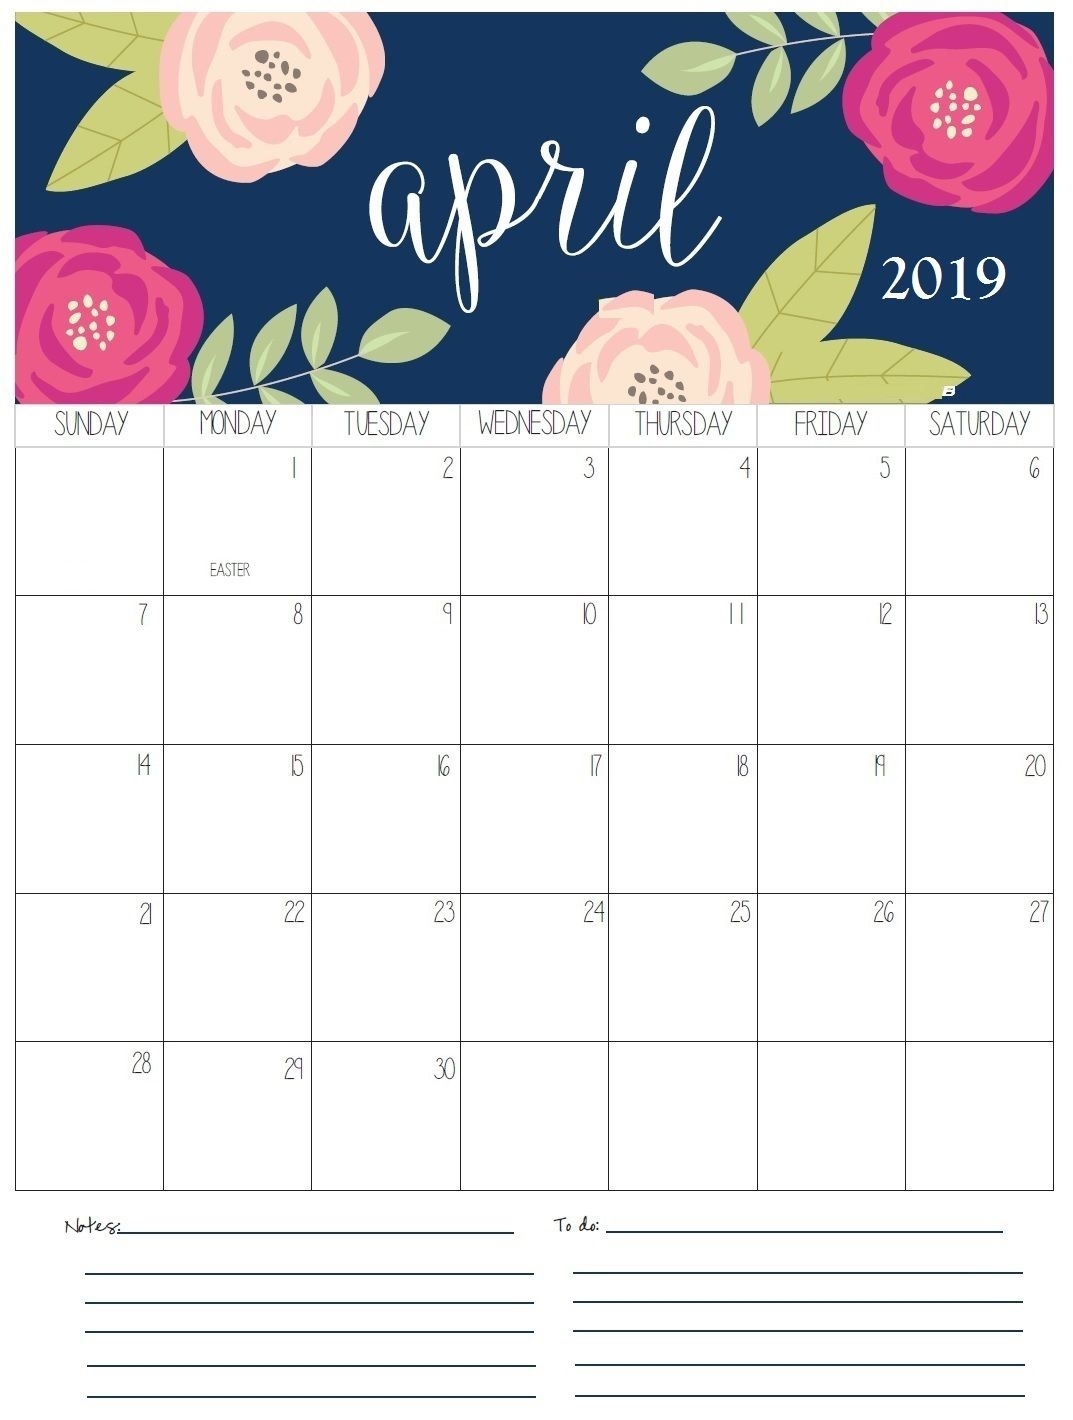 Pingiovana Melo On Calendário 2019 2 | April Calendar